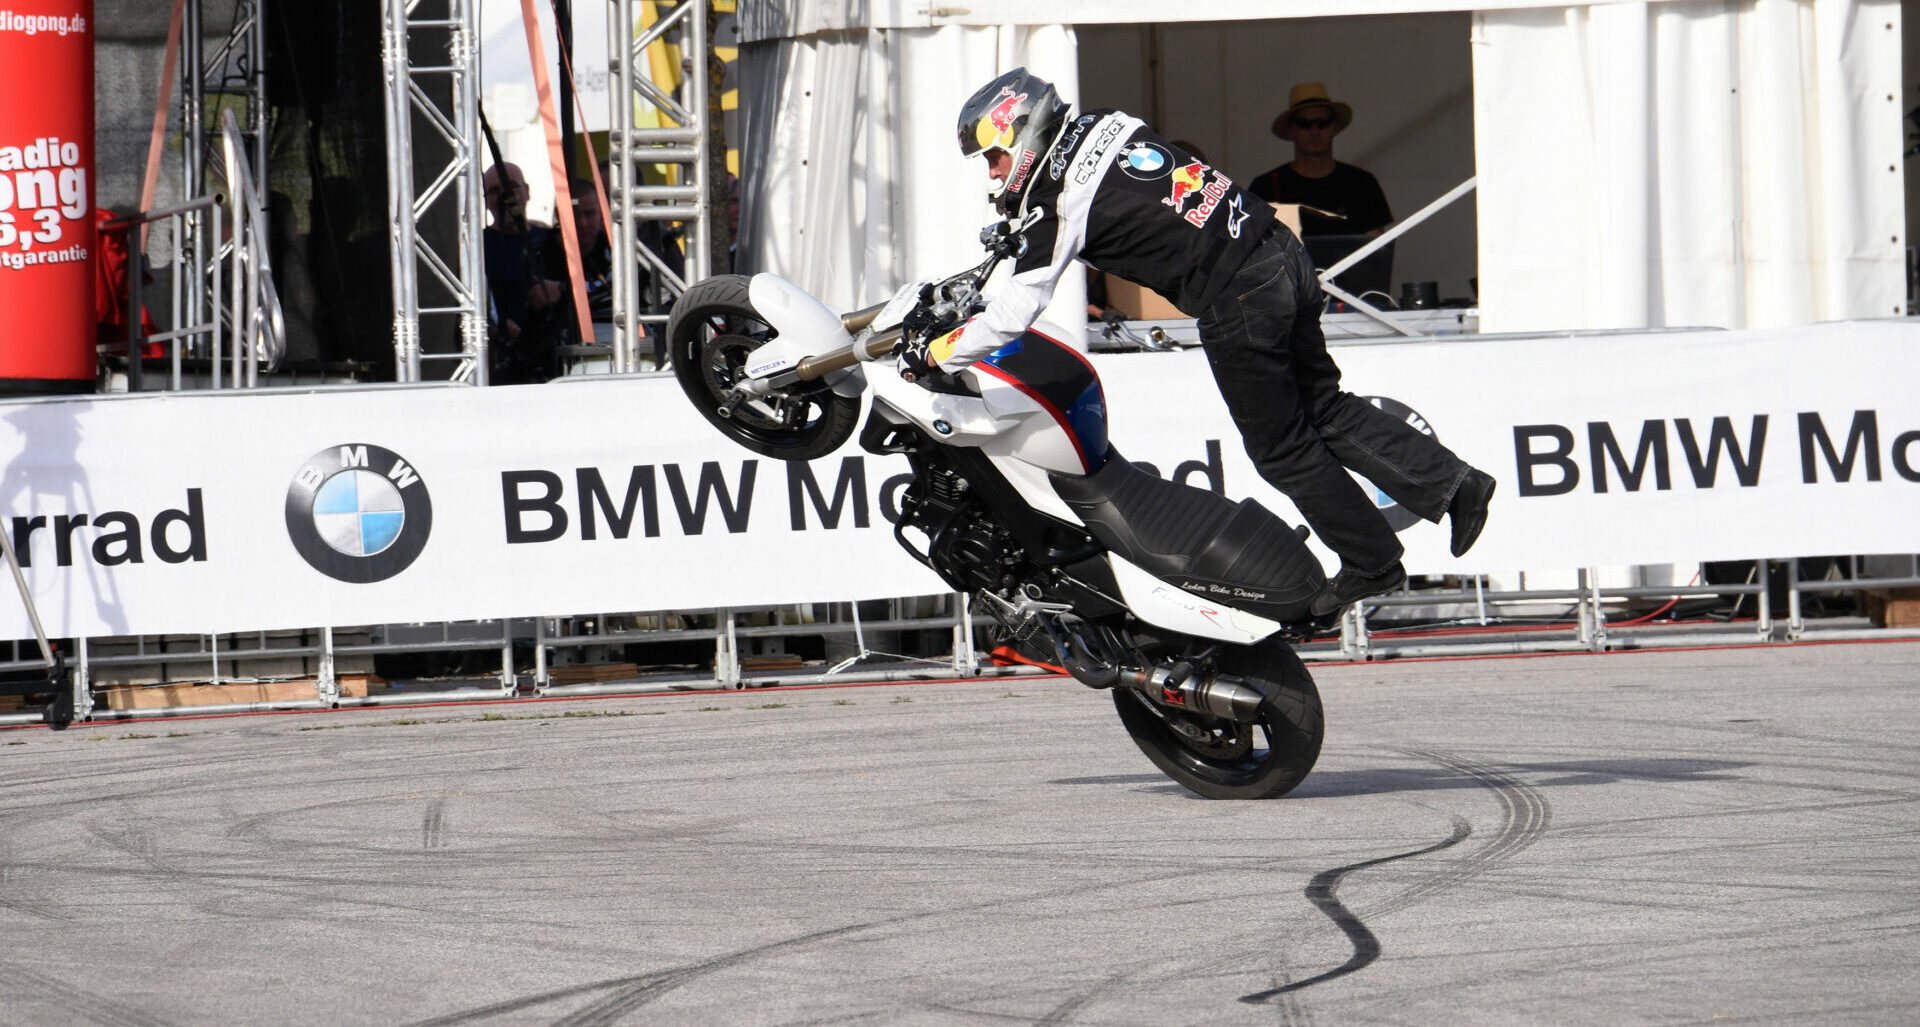 Chris Pfeiffer performing at BMW Motorrad Days in Germany in 2015. Photo courtesy BMW Motorrad.